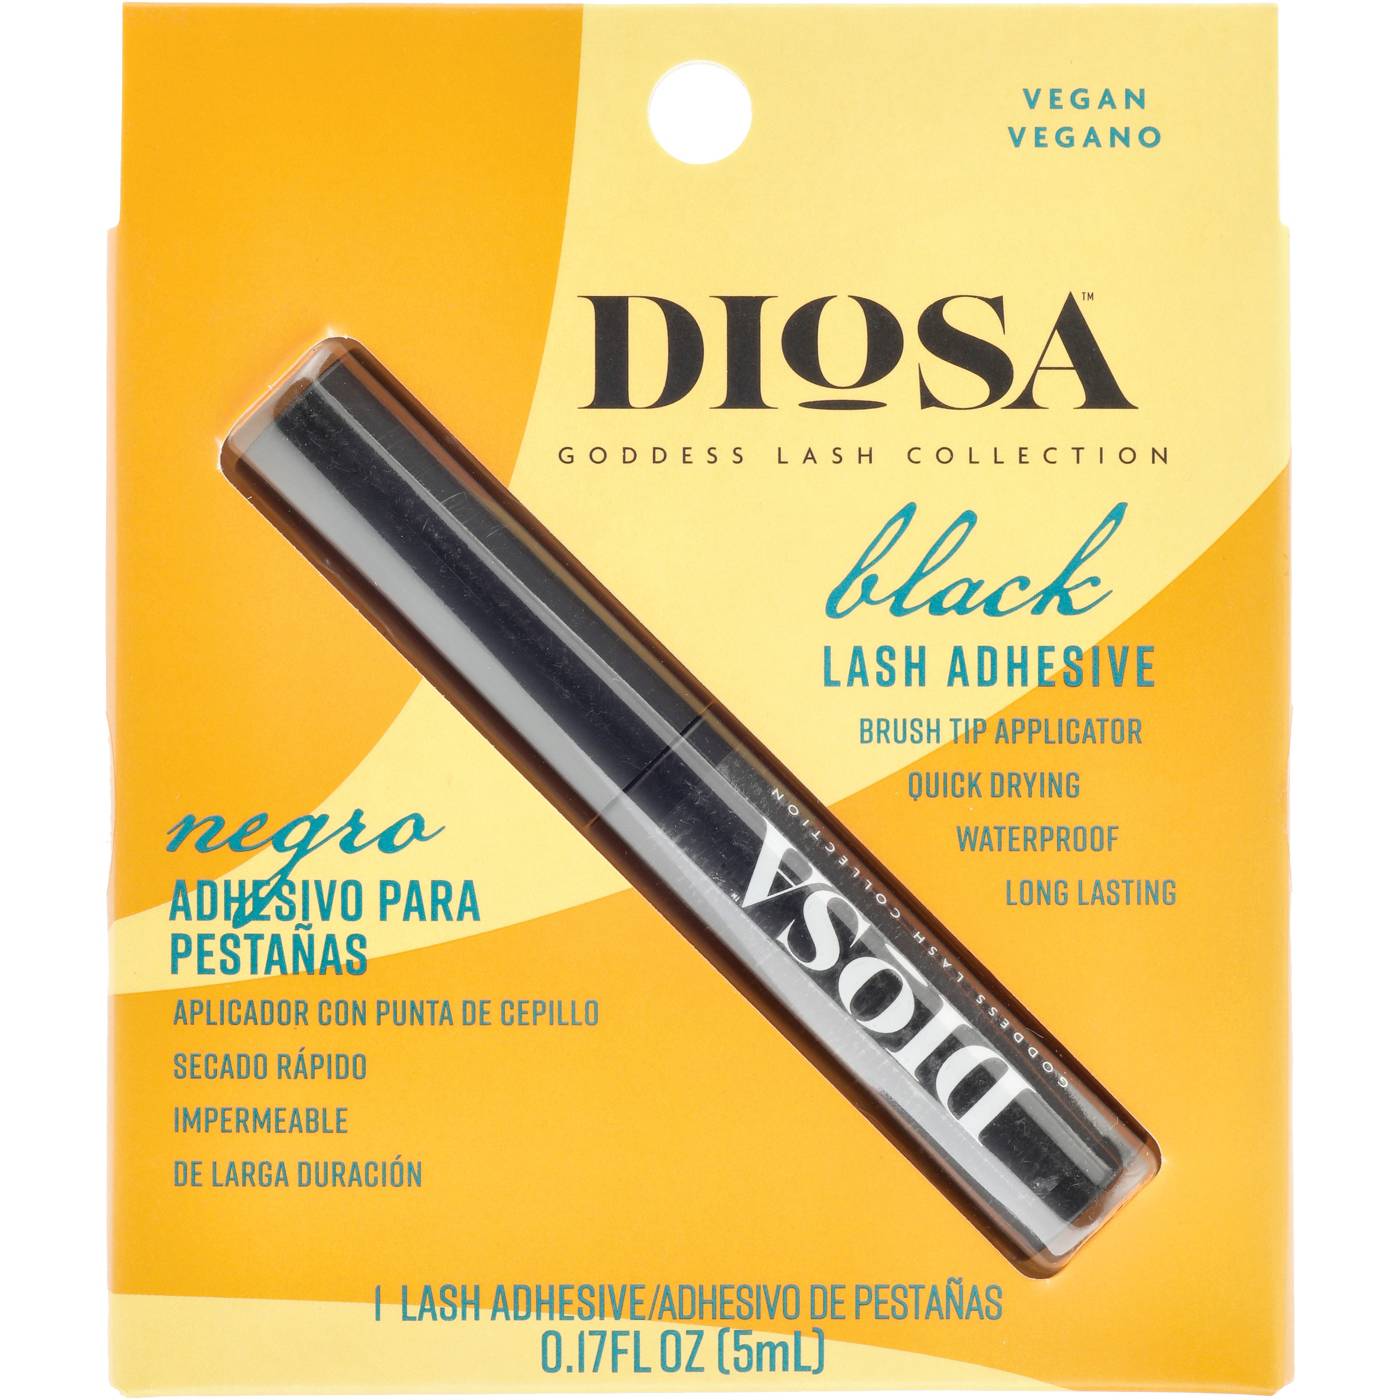 Diosa Brush Tip Lash Adhesive - Black; image 1 of 4